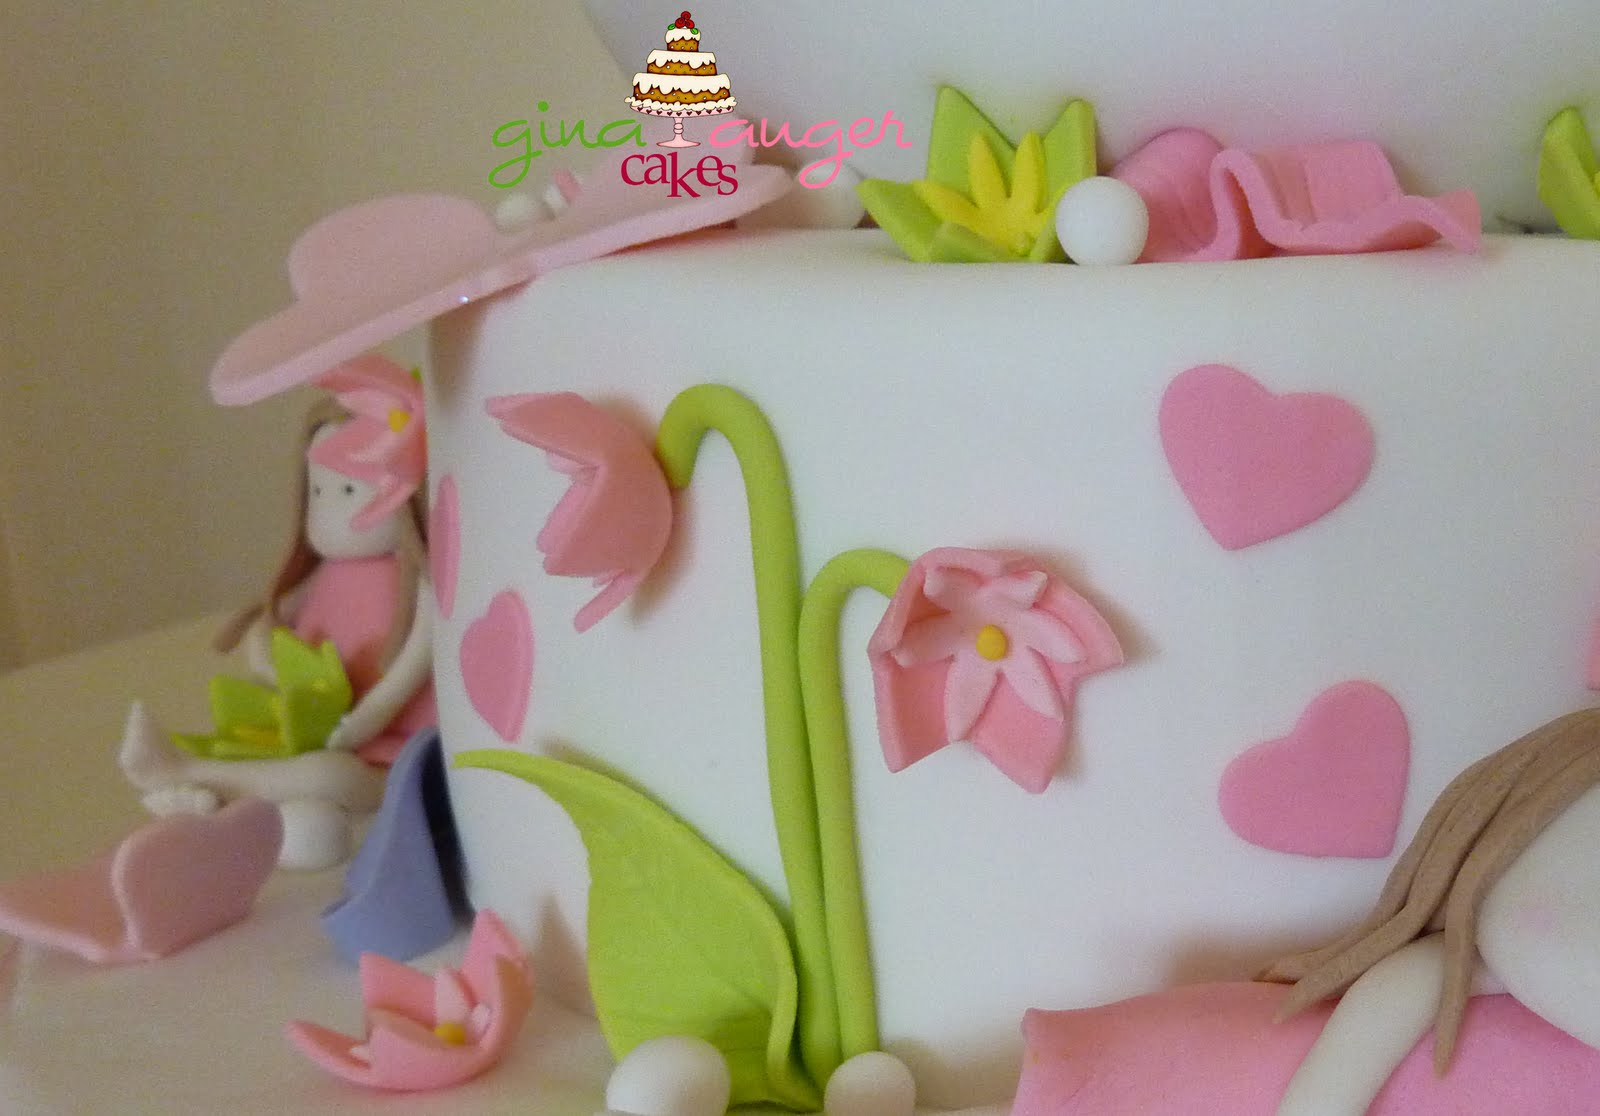 Little Girls Birthday Cake